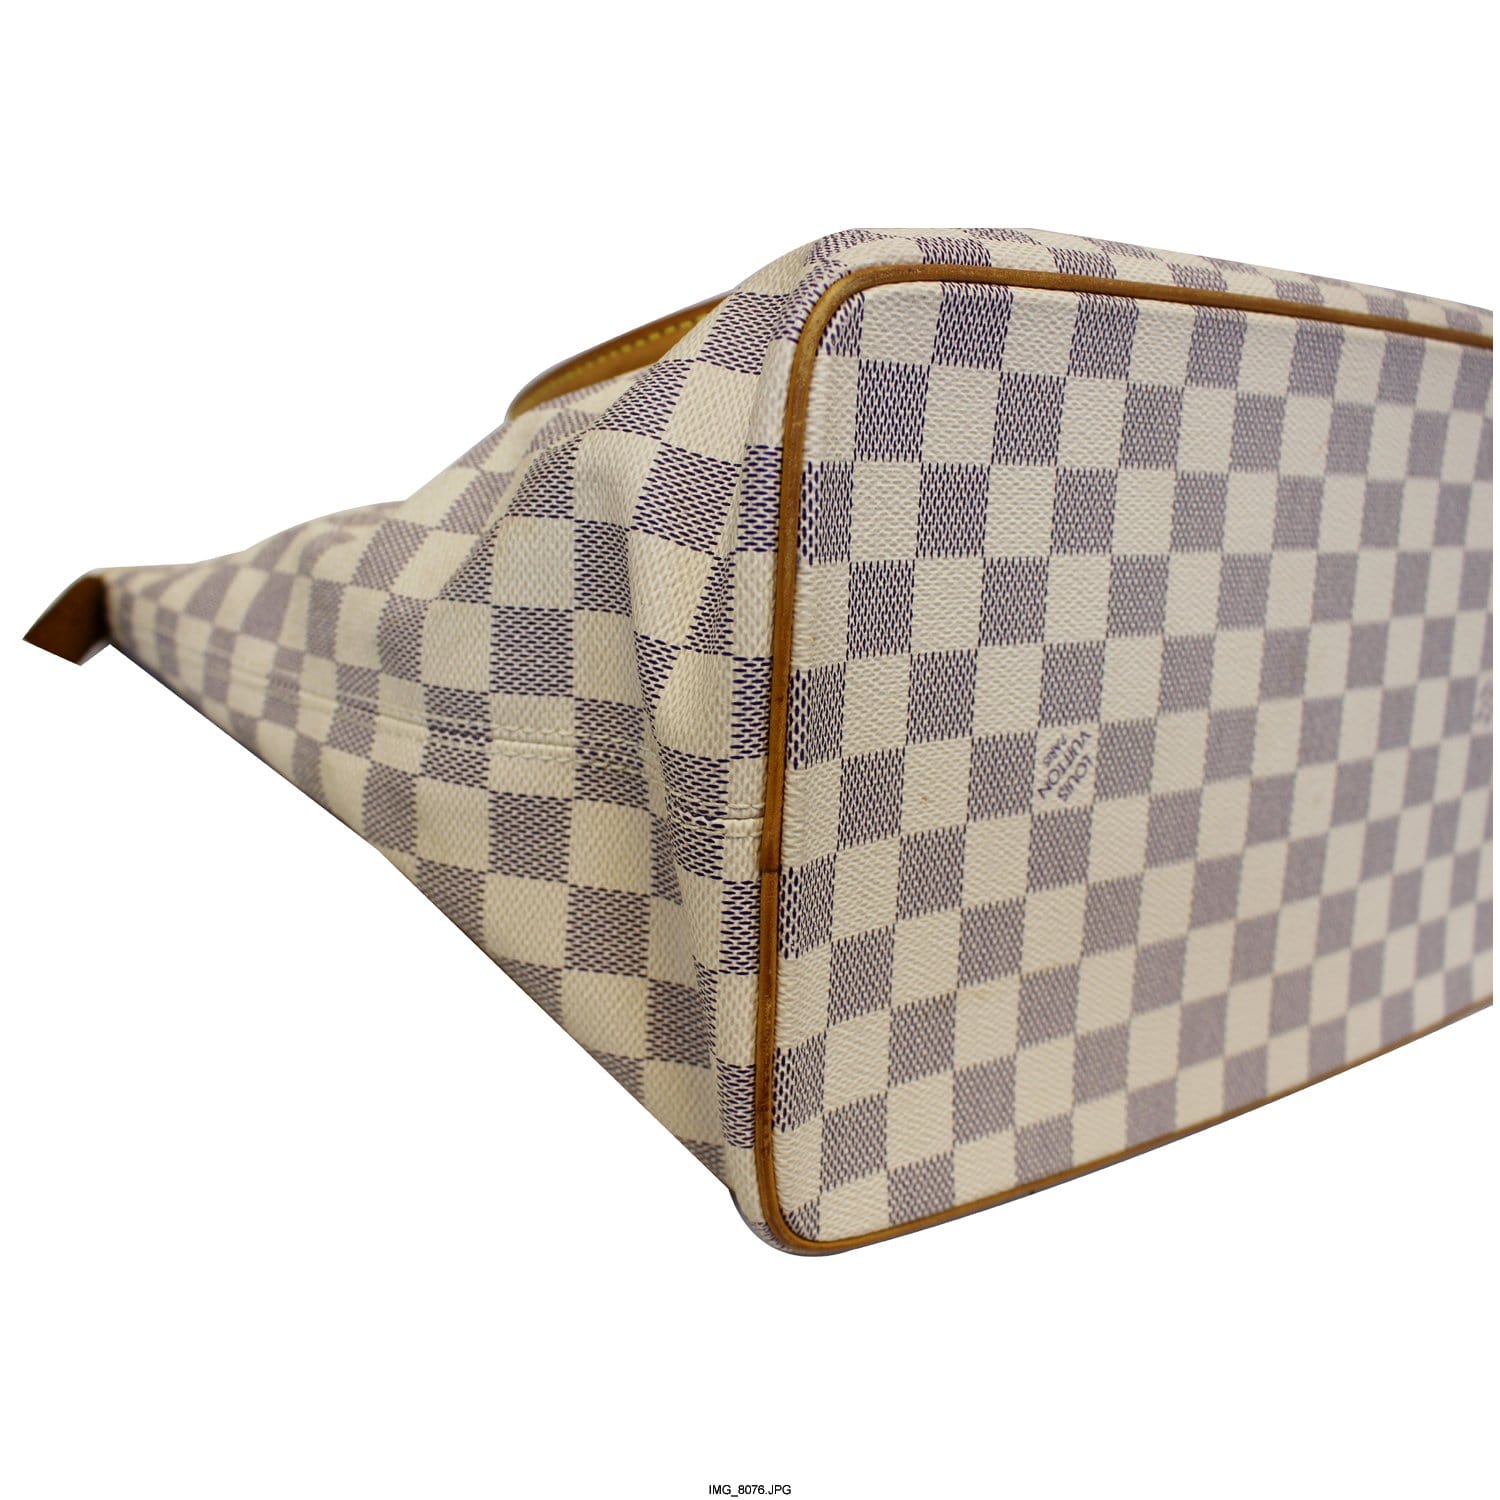 Louis Vuitton Damier Azur Saleya Shoulder Bag